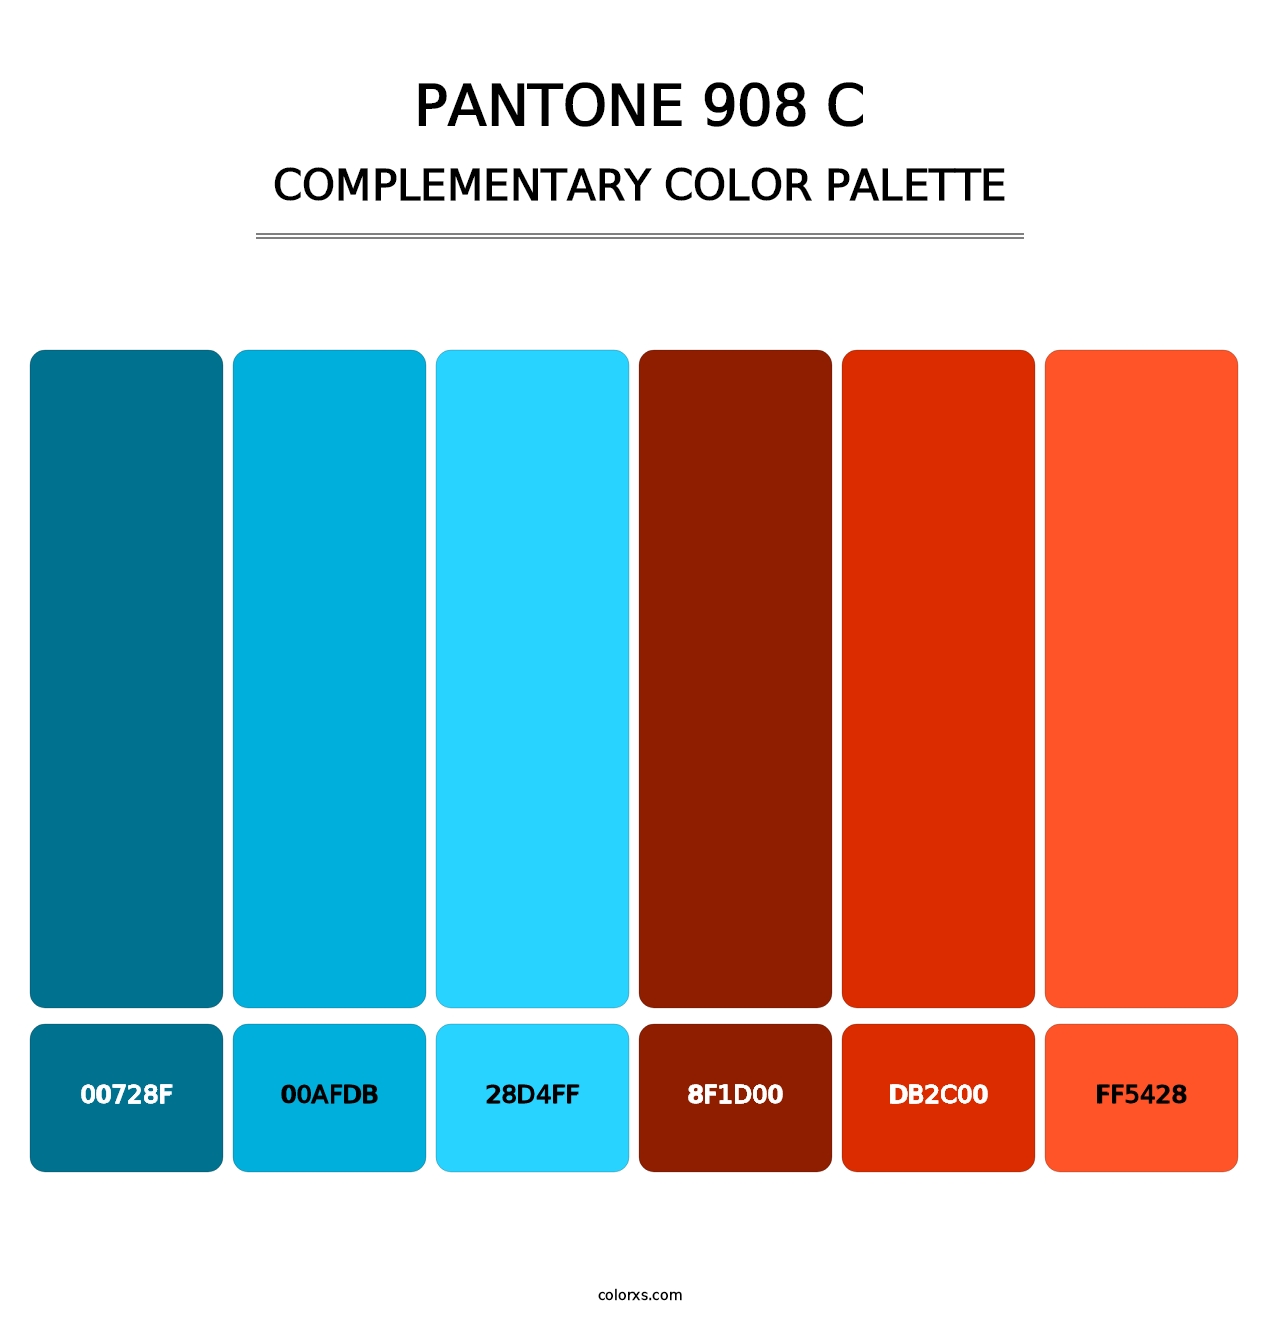 PANTONE 908 C - Complementary Color Palette